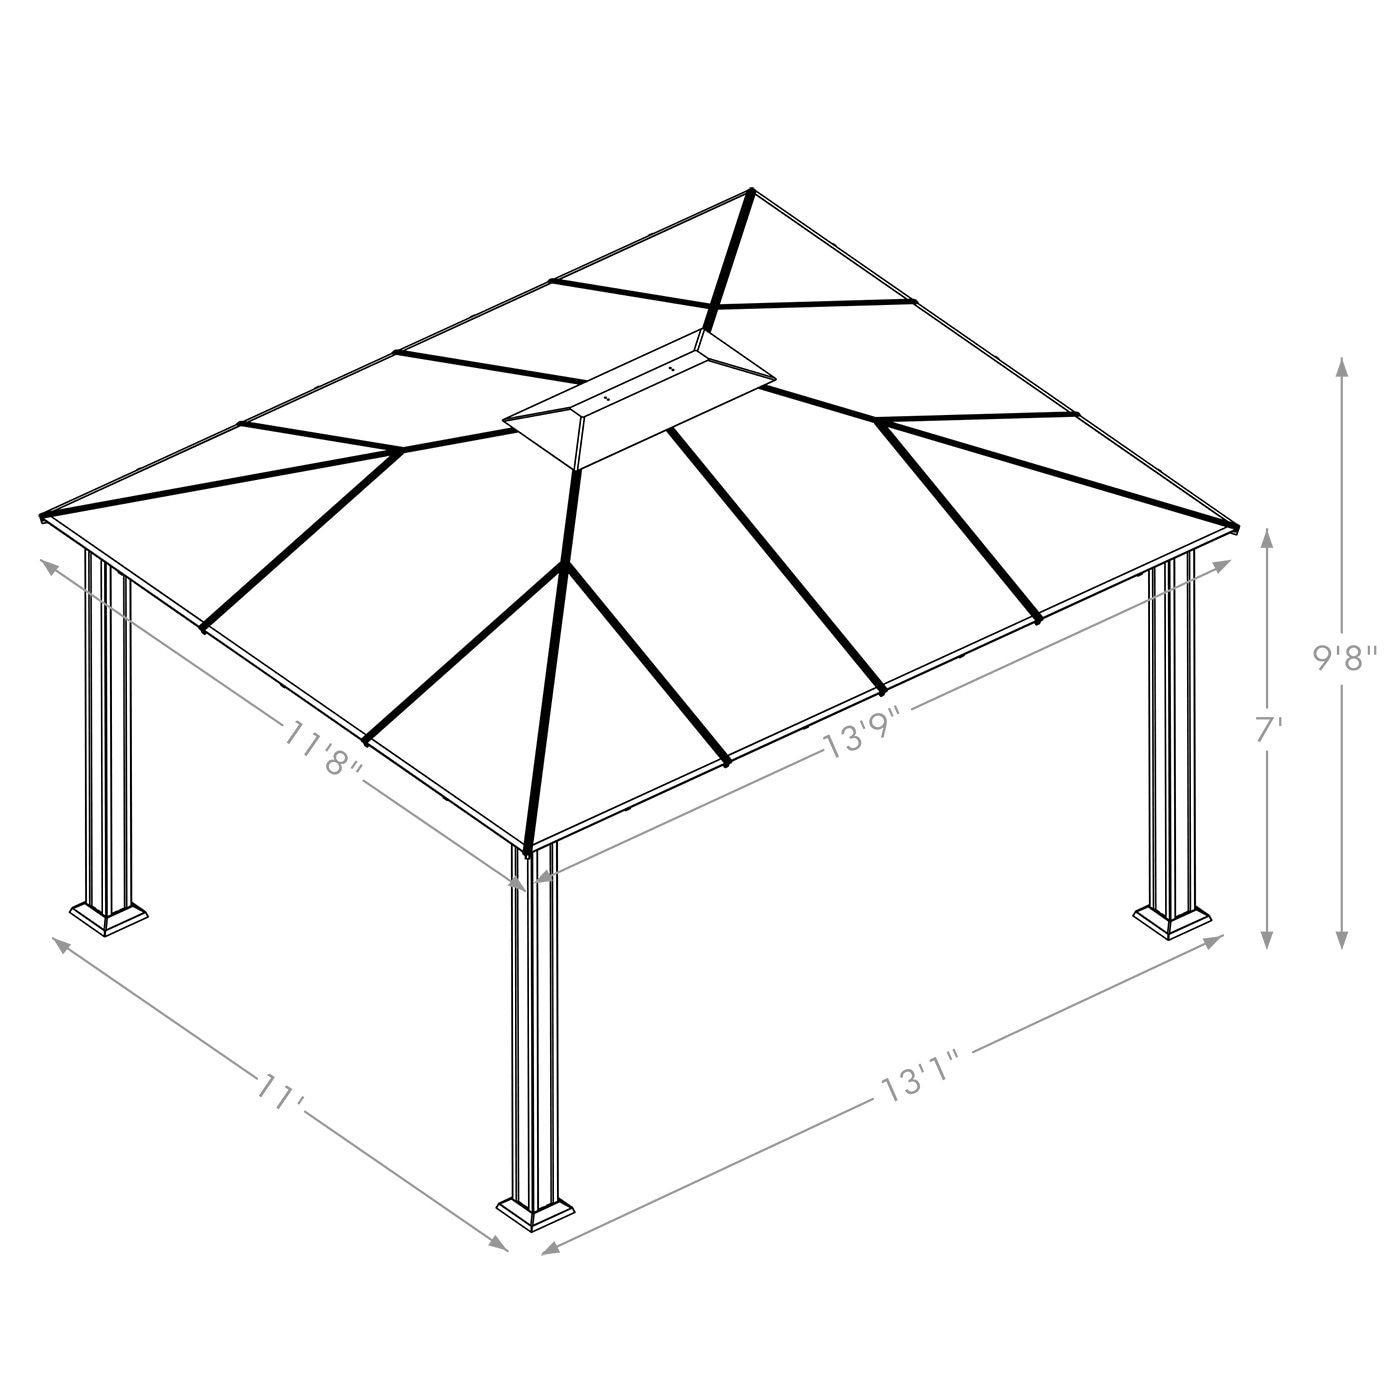 Paragon 12呎 X 14呎戶外遮陽露臺四面採光遮陽亭，可透自然光且通風、防蚊蟲